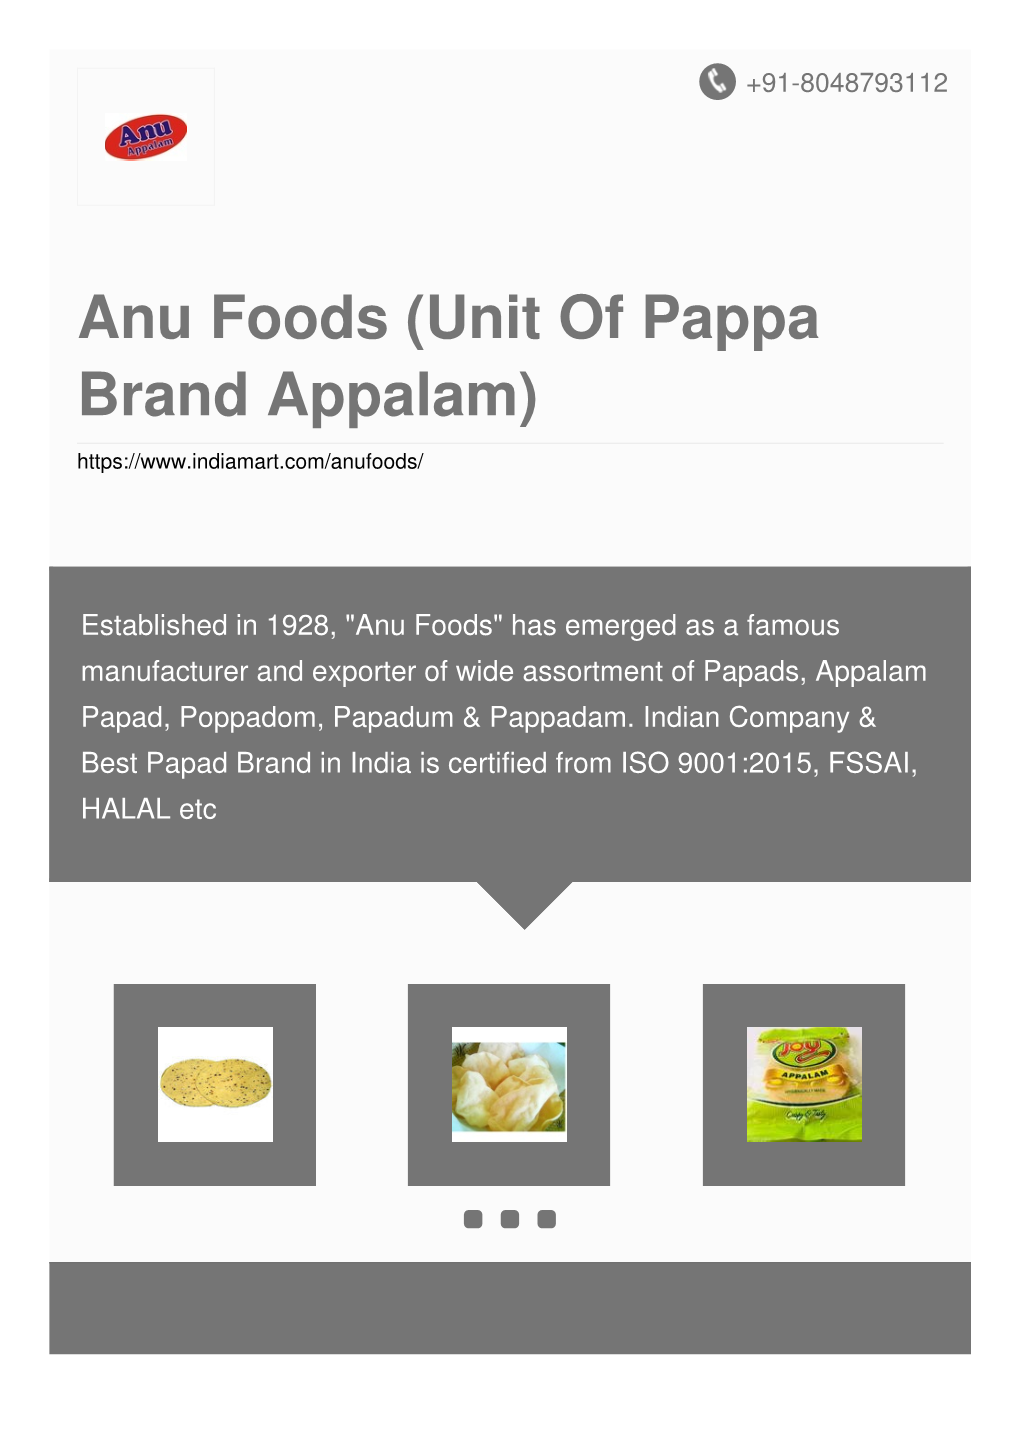 Anu Foods (Unit of Pappa Brand Appalam)